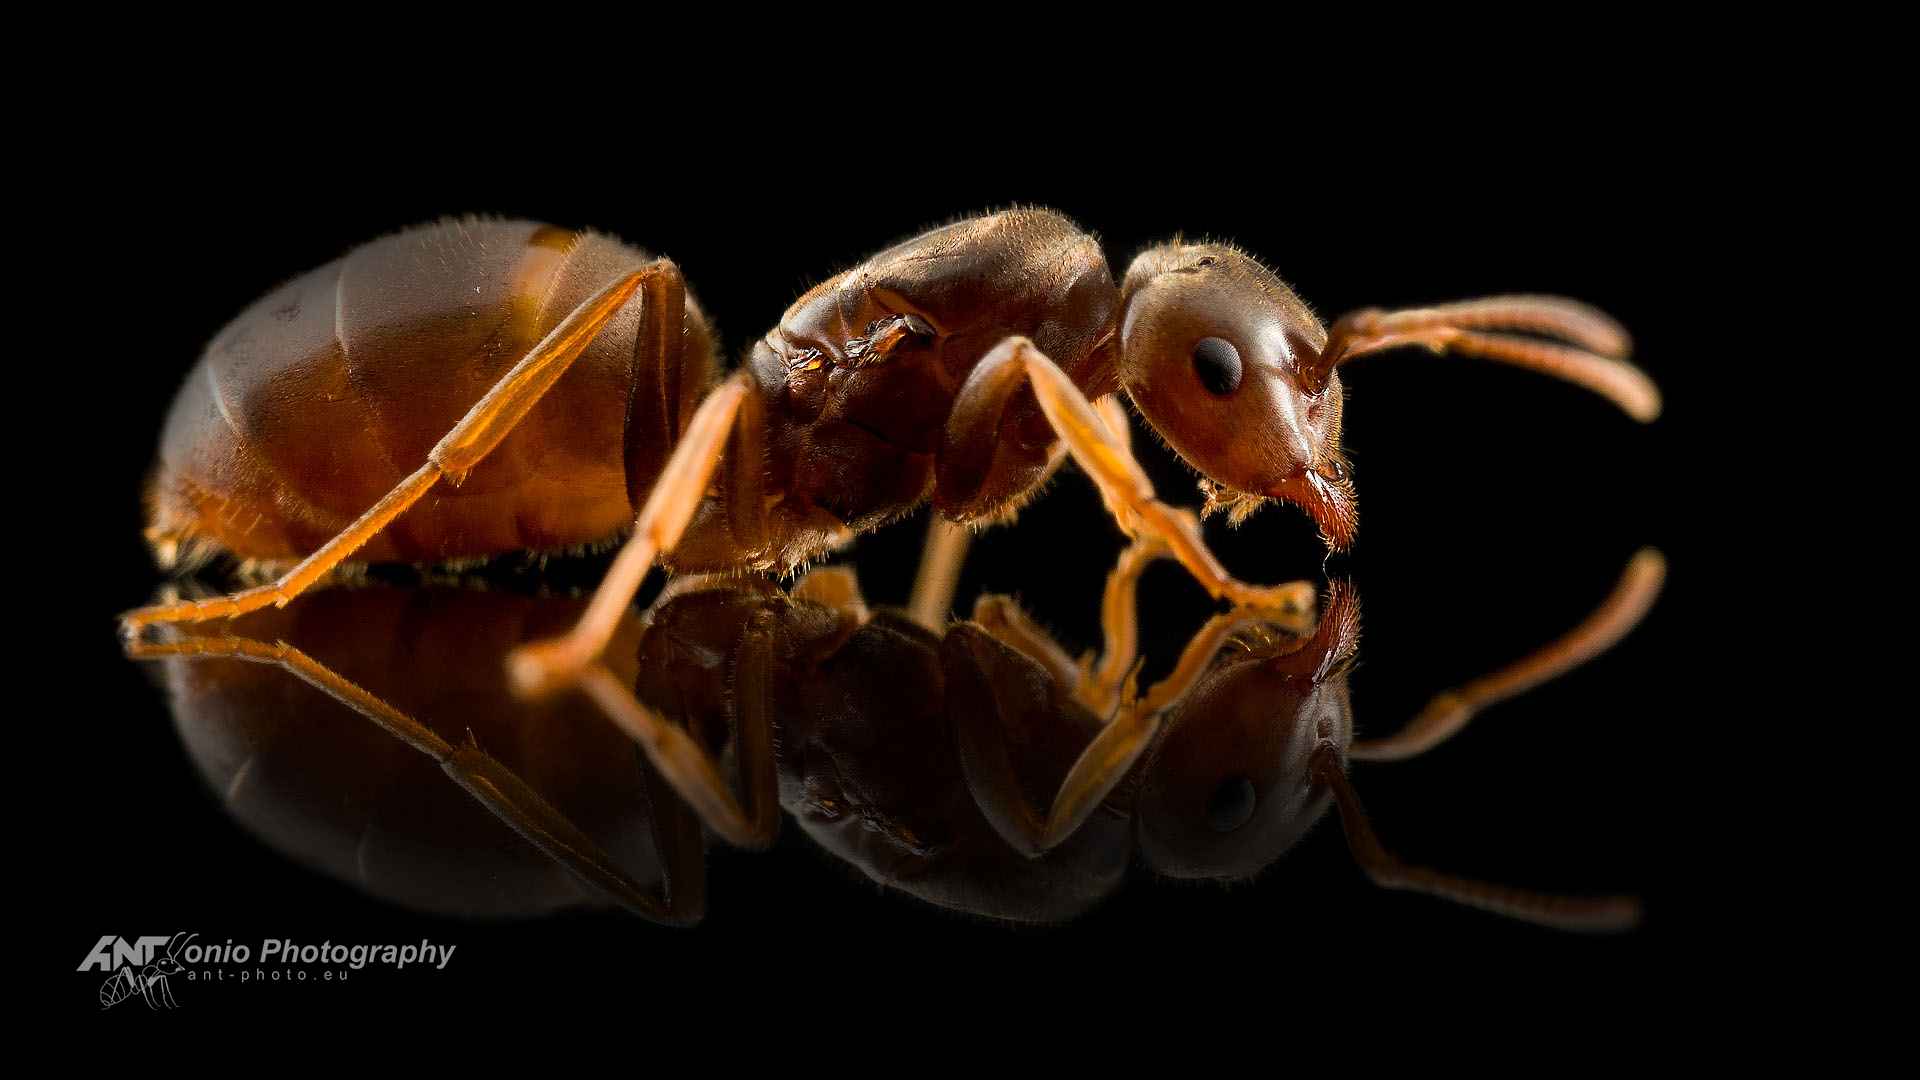 Chthonolasius ants